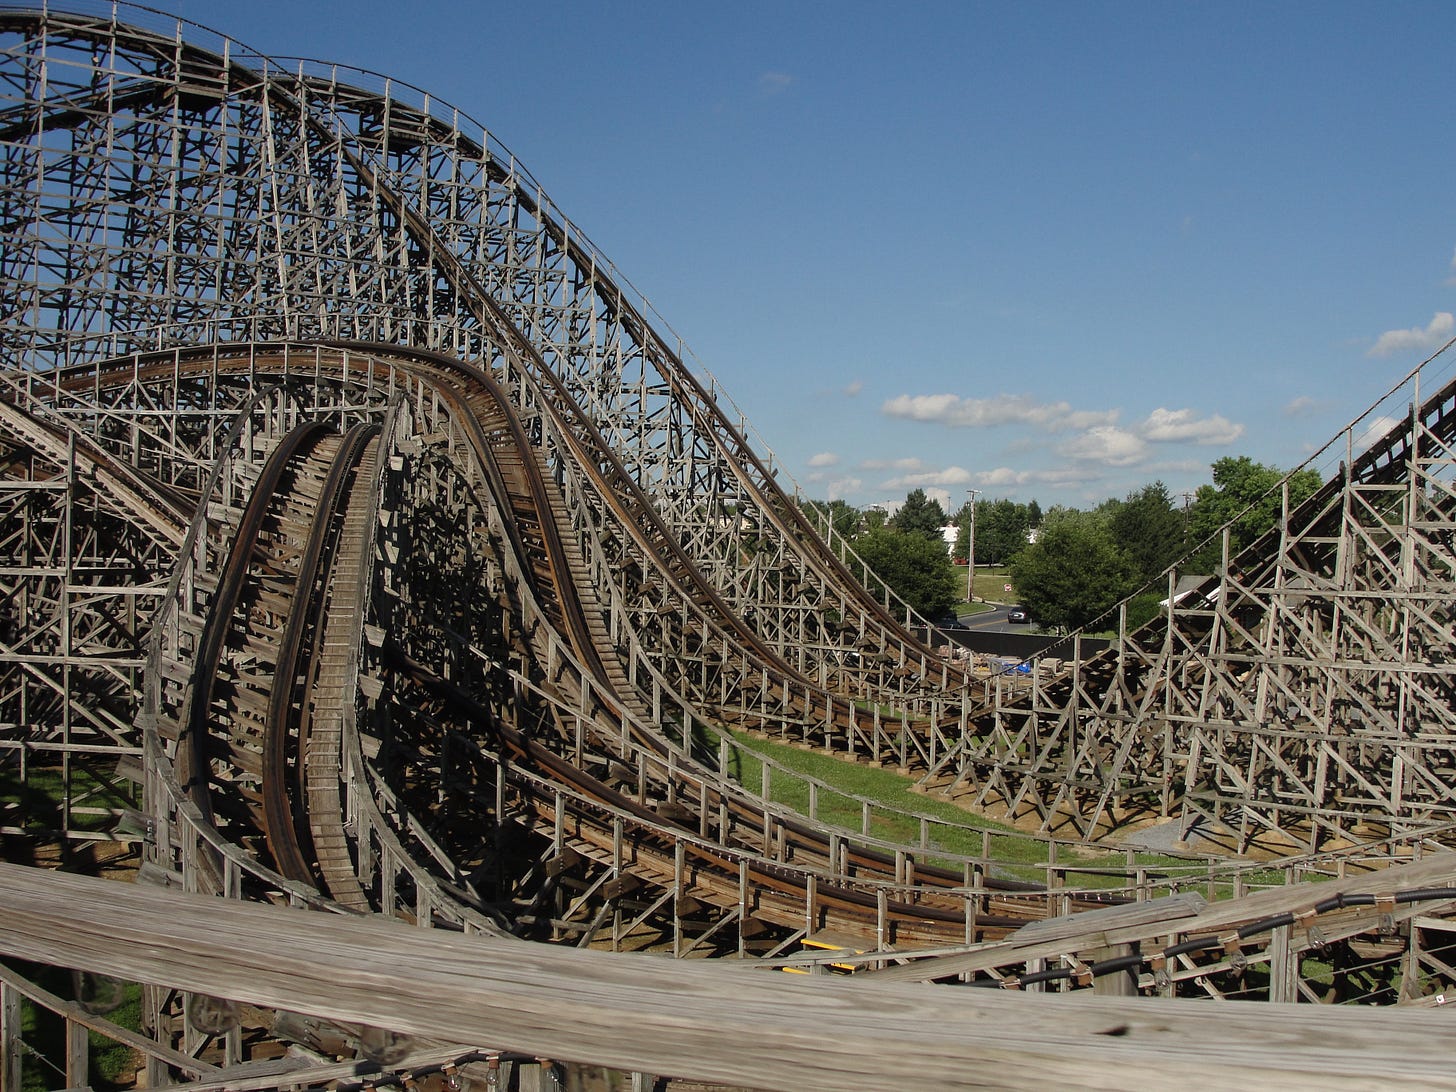 File:Hershey Park roller coaster tracks.jpg - Wikimedia Commons